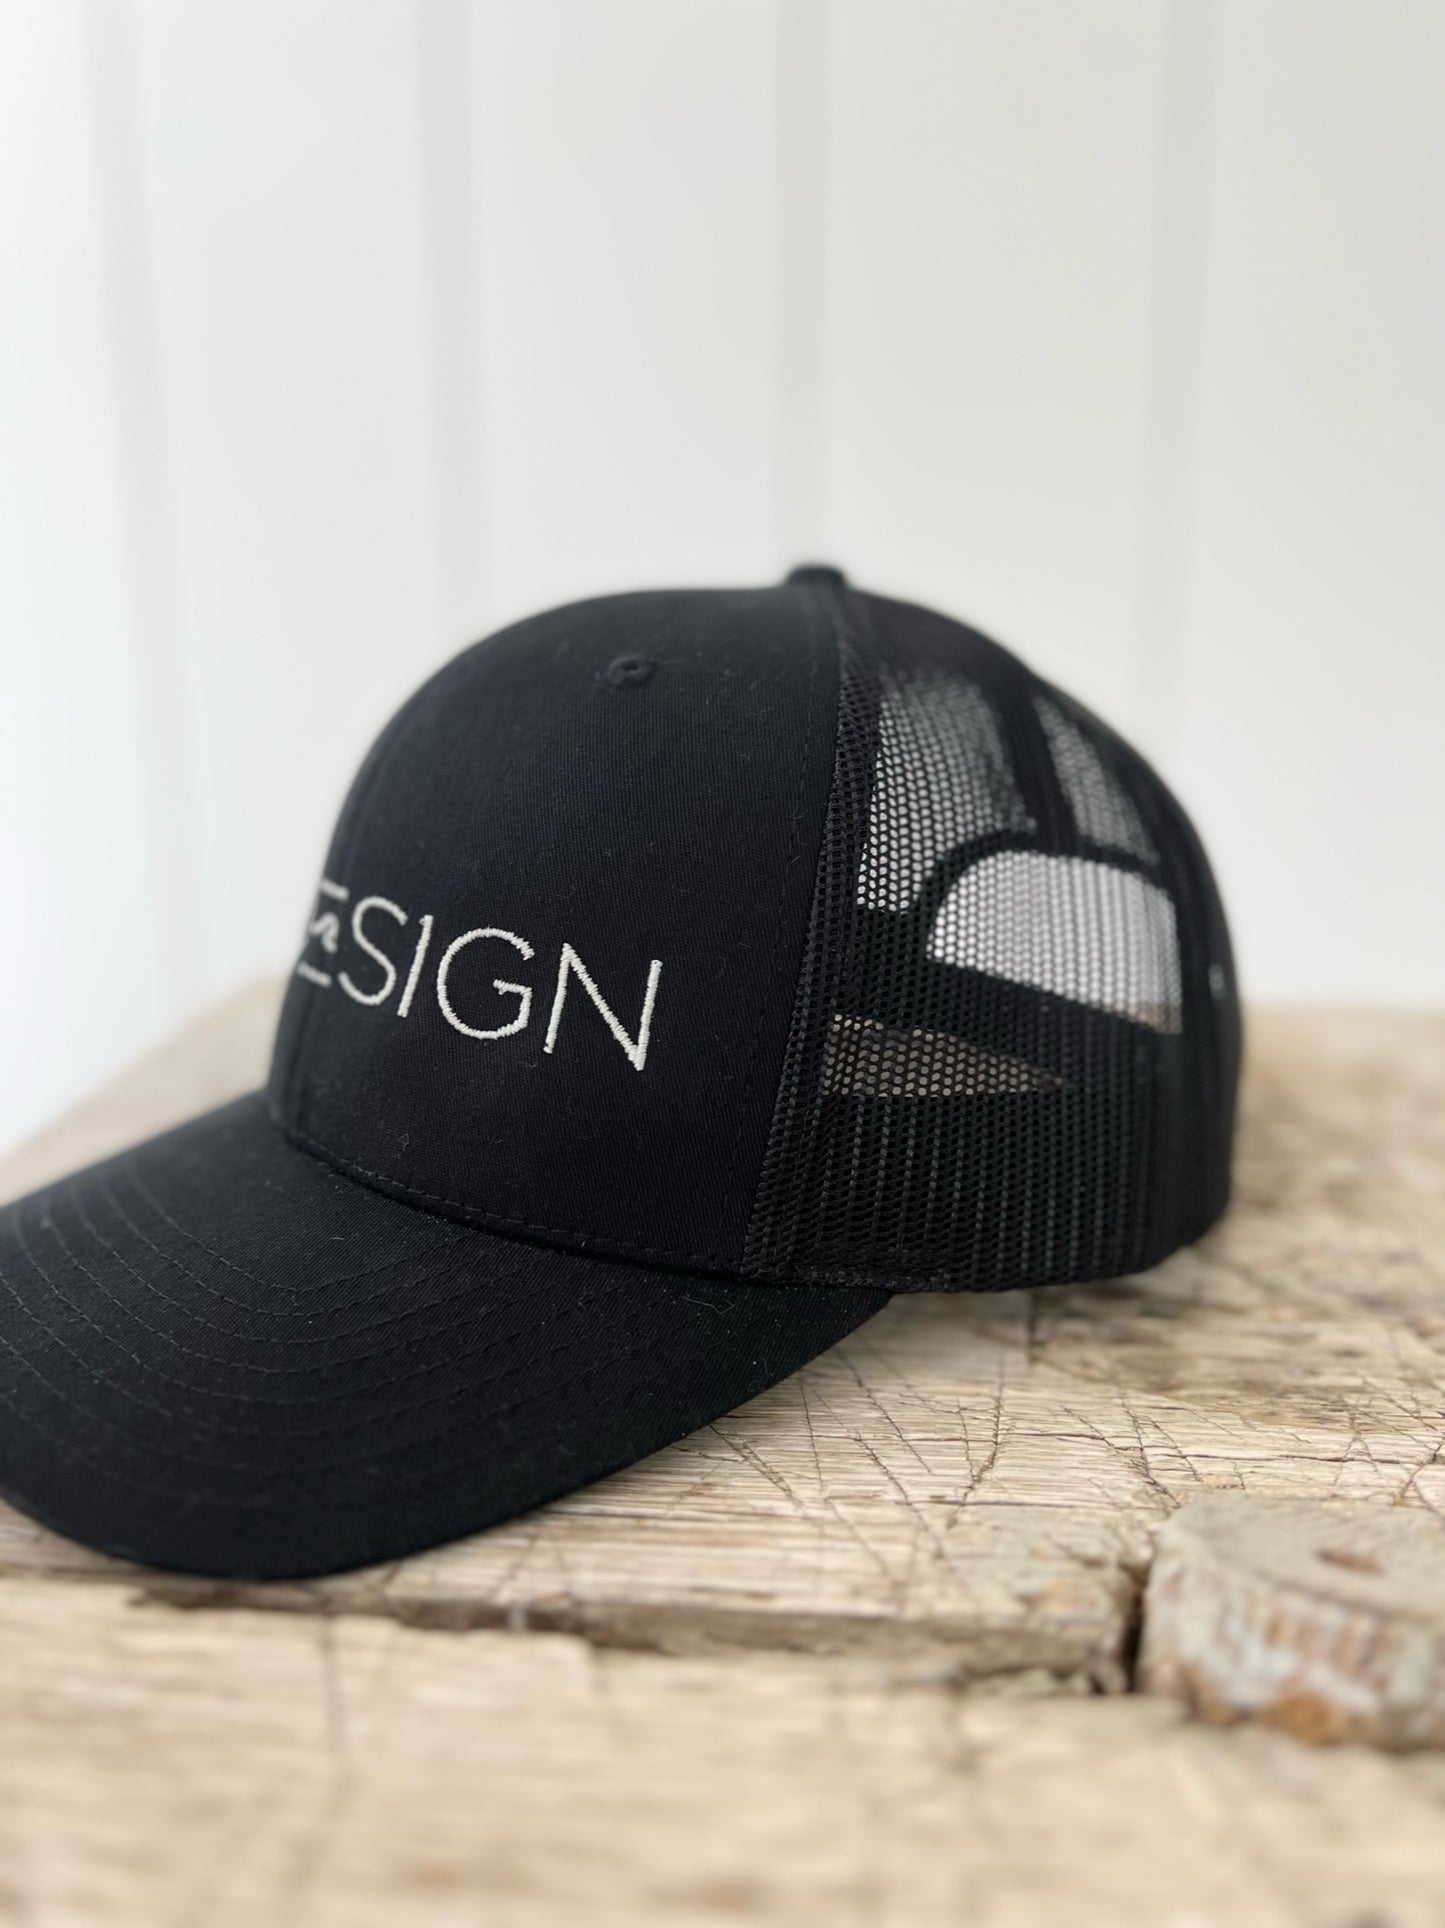 GLDESIGN Trucker Hat - Black/Black